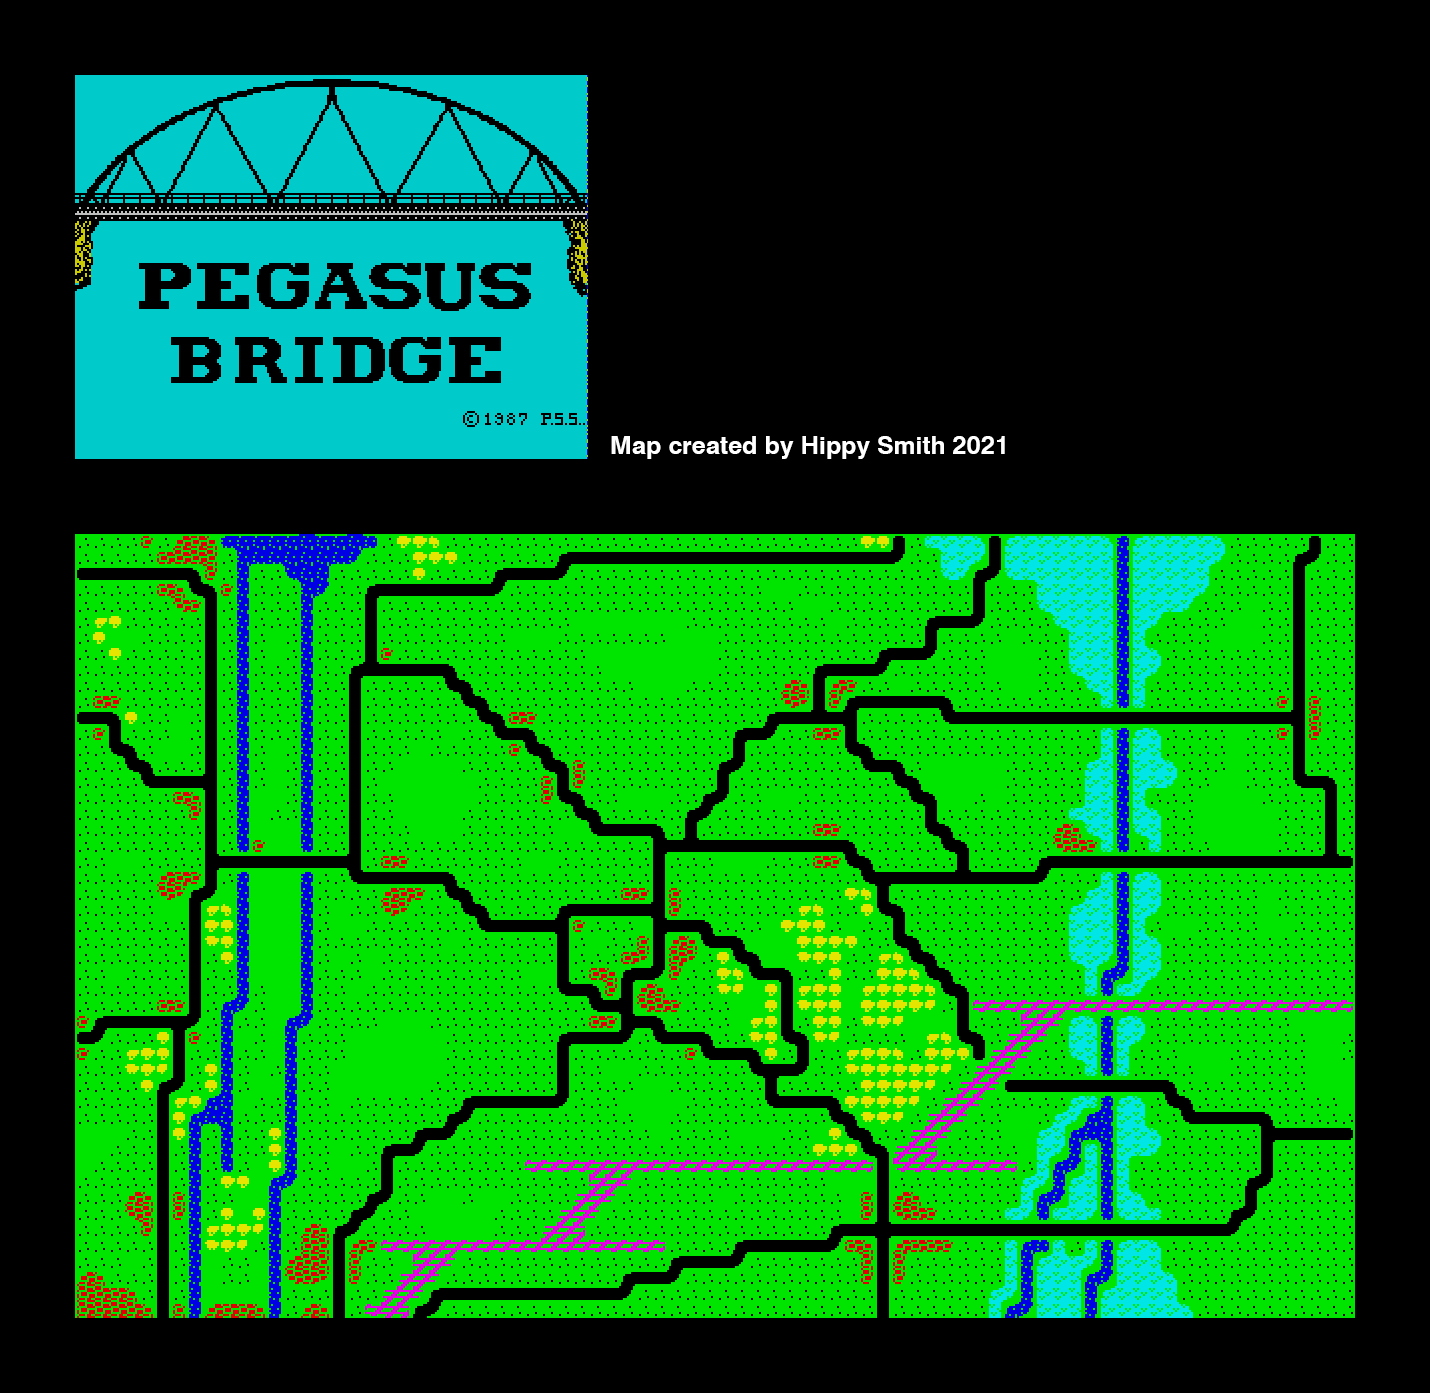 Pegasus Bridge - The Map